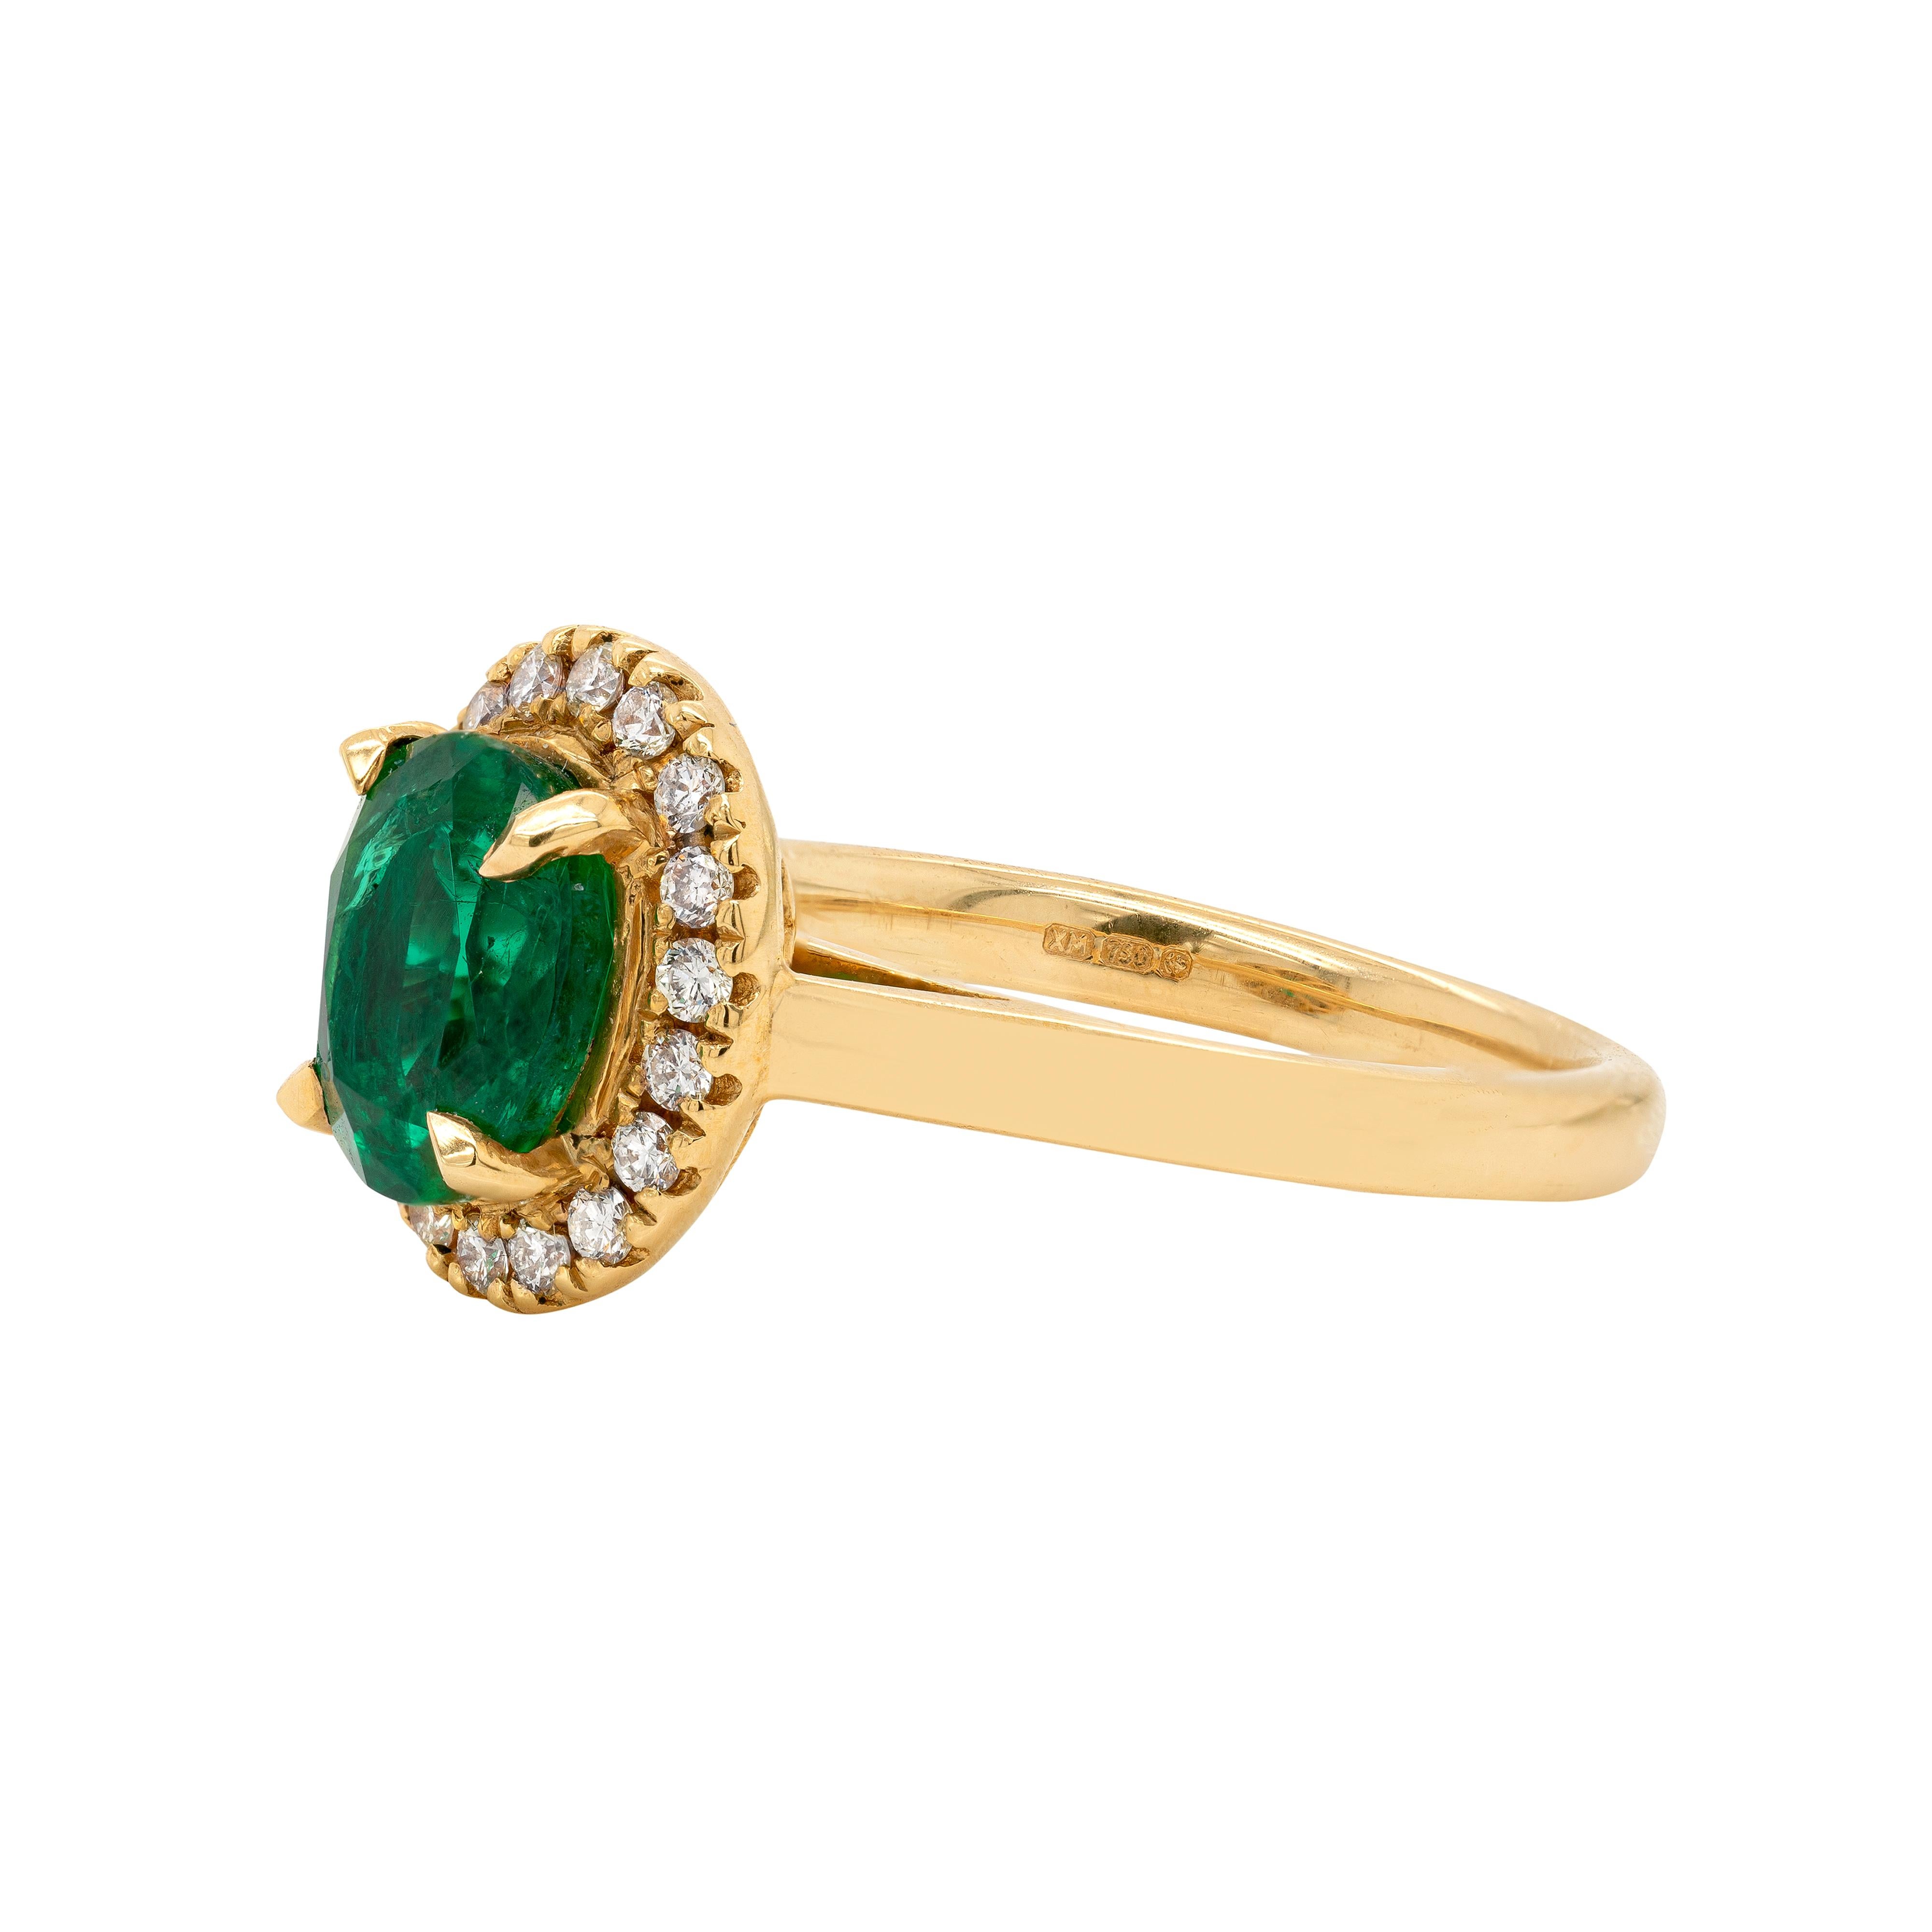 18 carat emerald ring